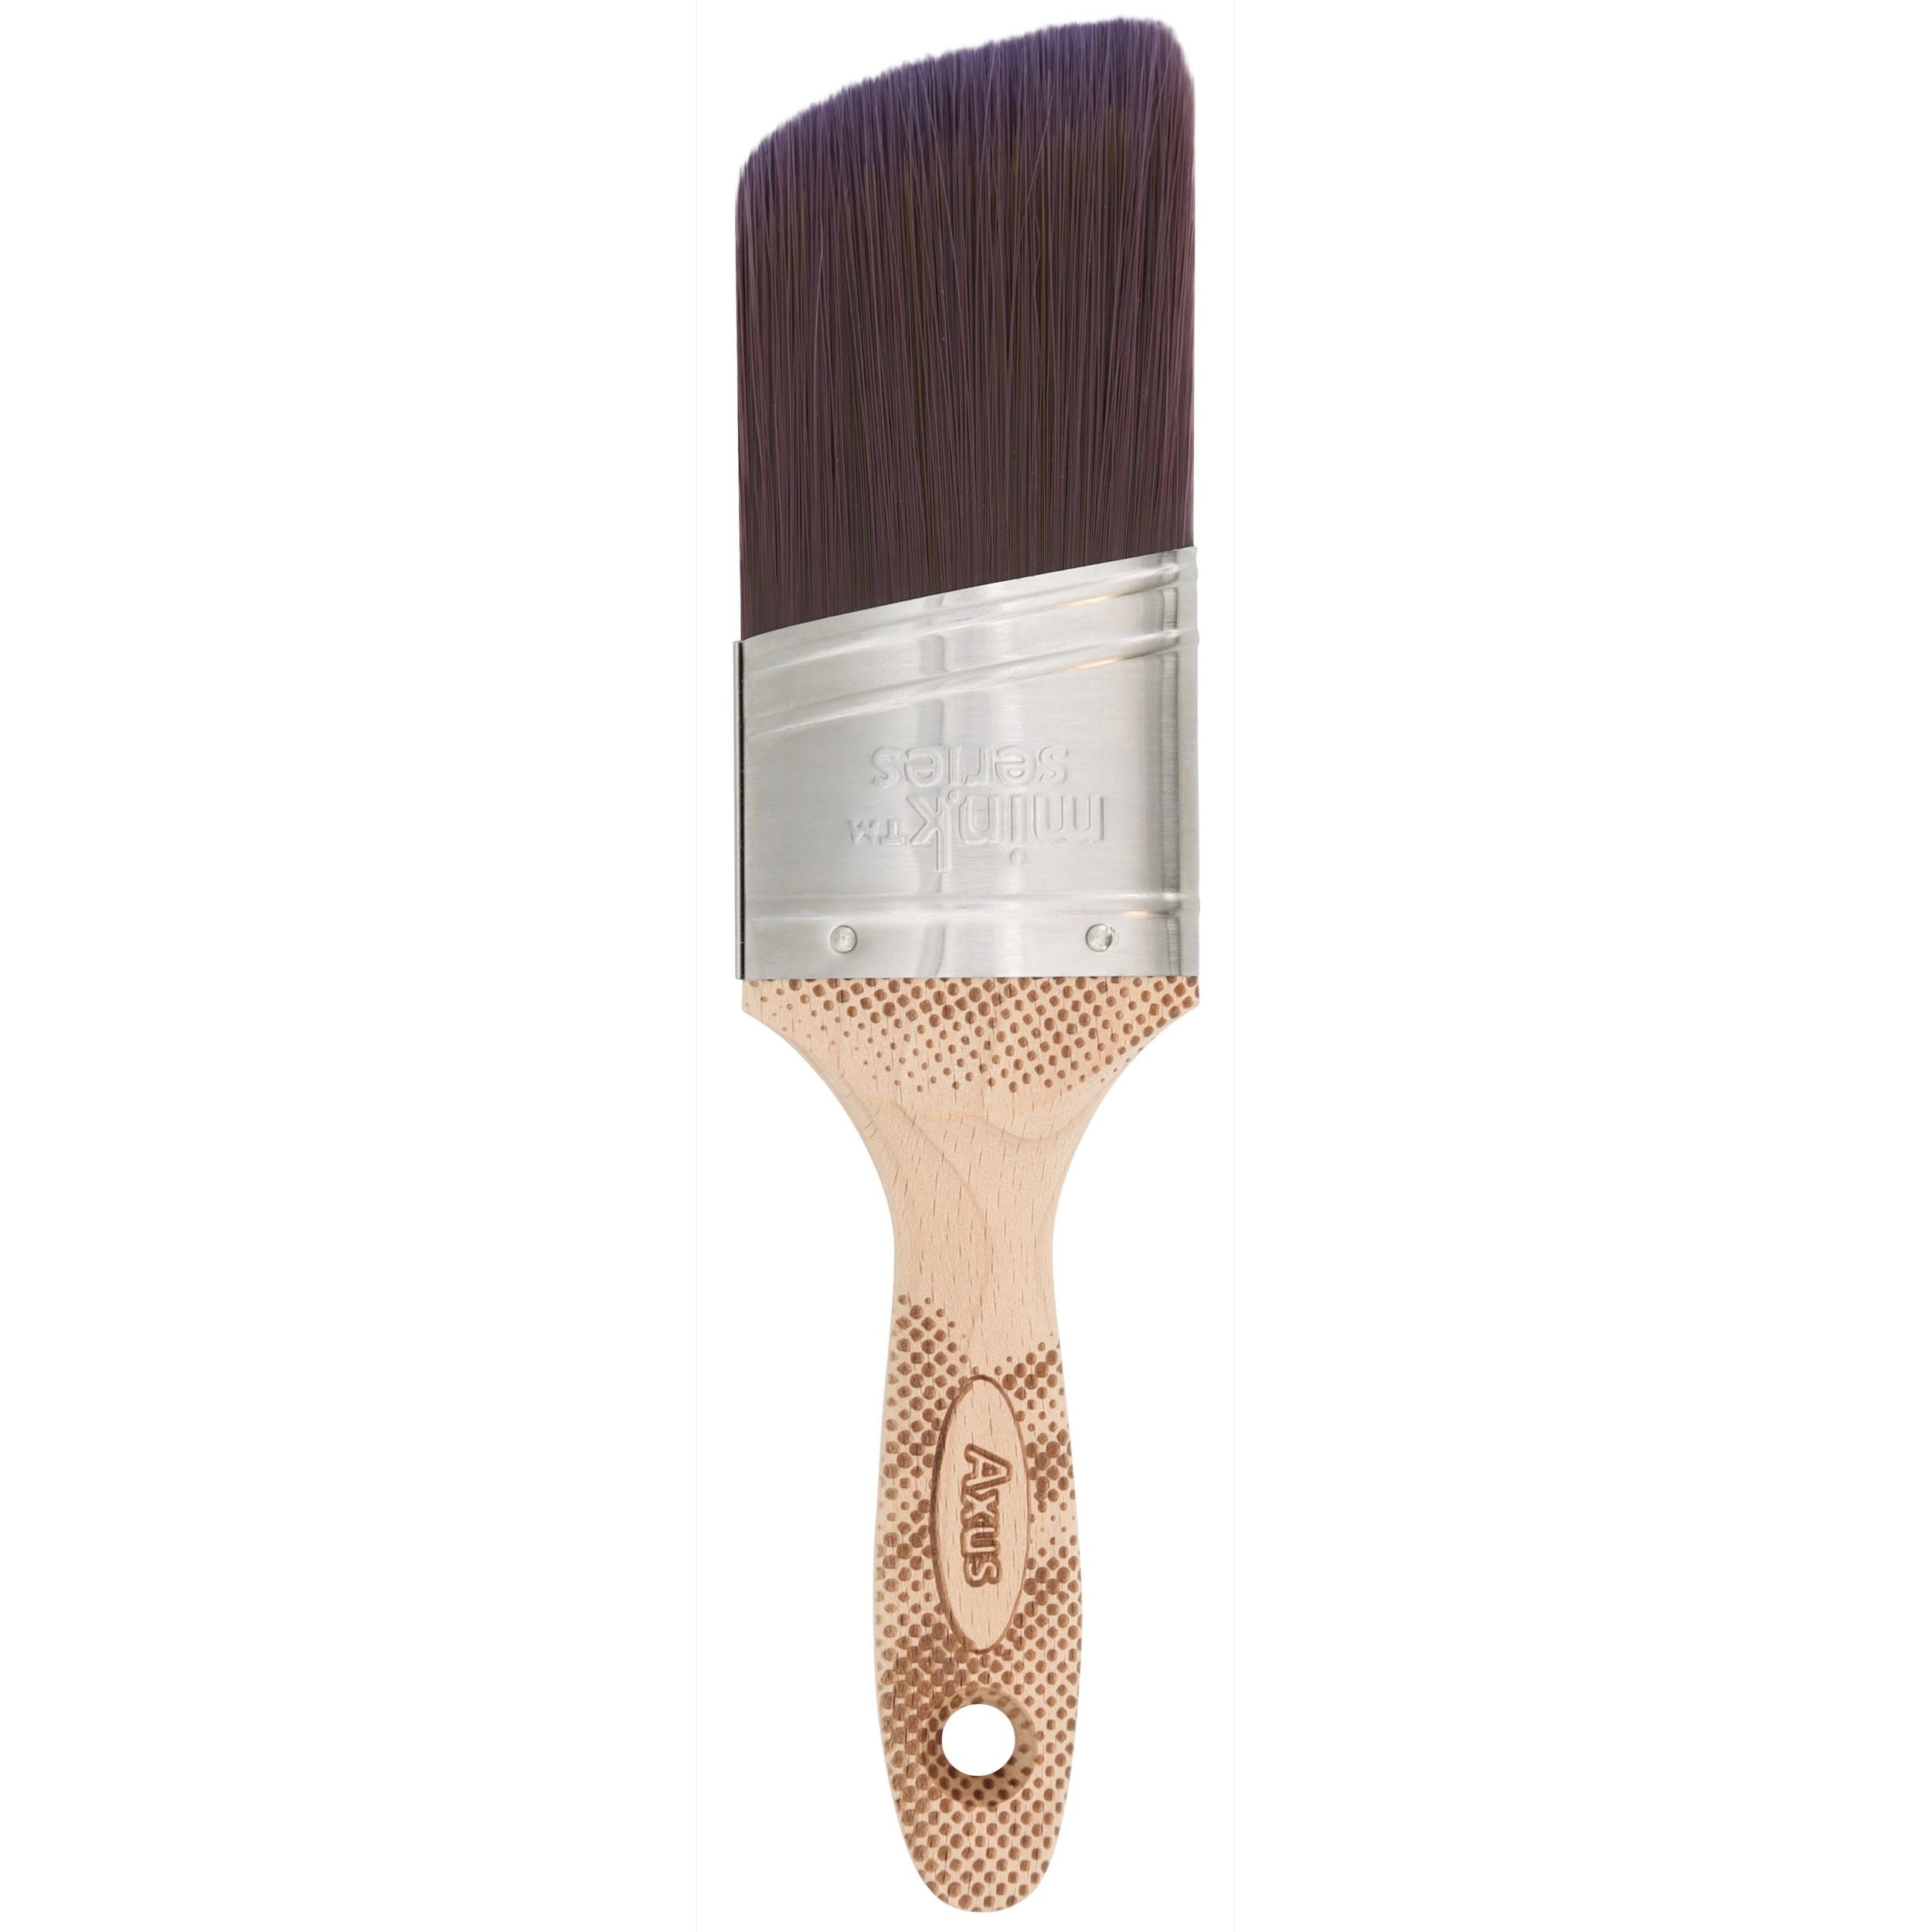 Axus Silk Shortcut Ultra Paint Brush 2 Inch